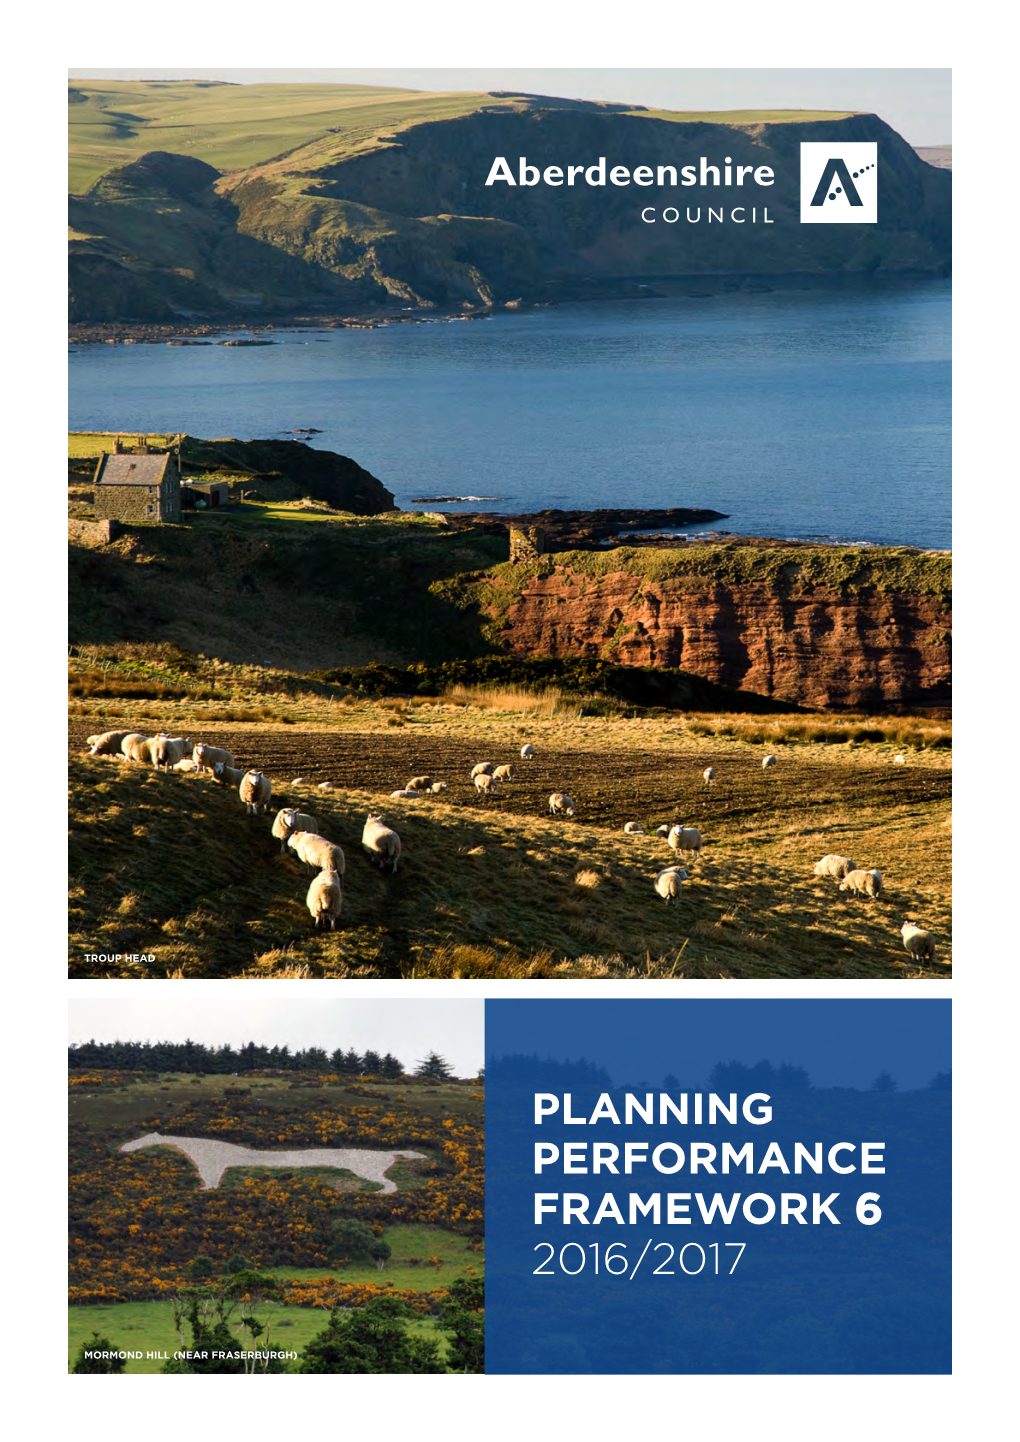 Planning Performance Framework 6 2016/2017